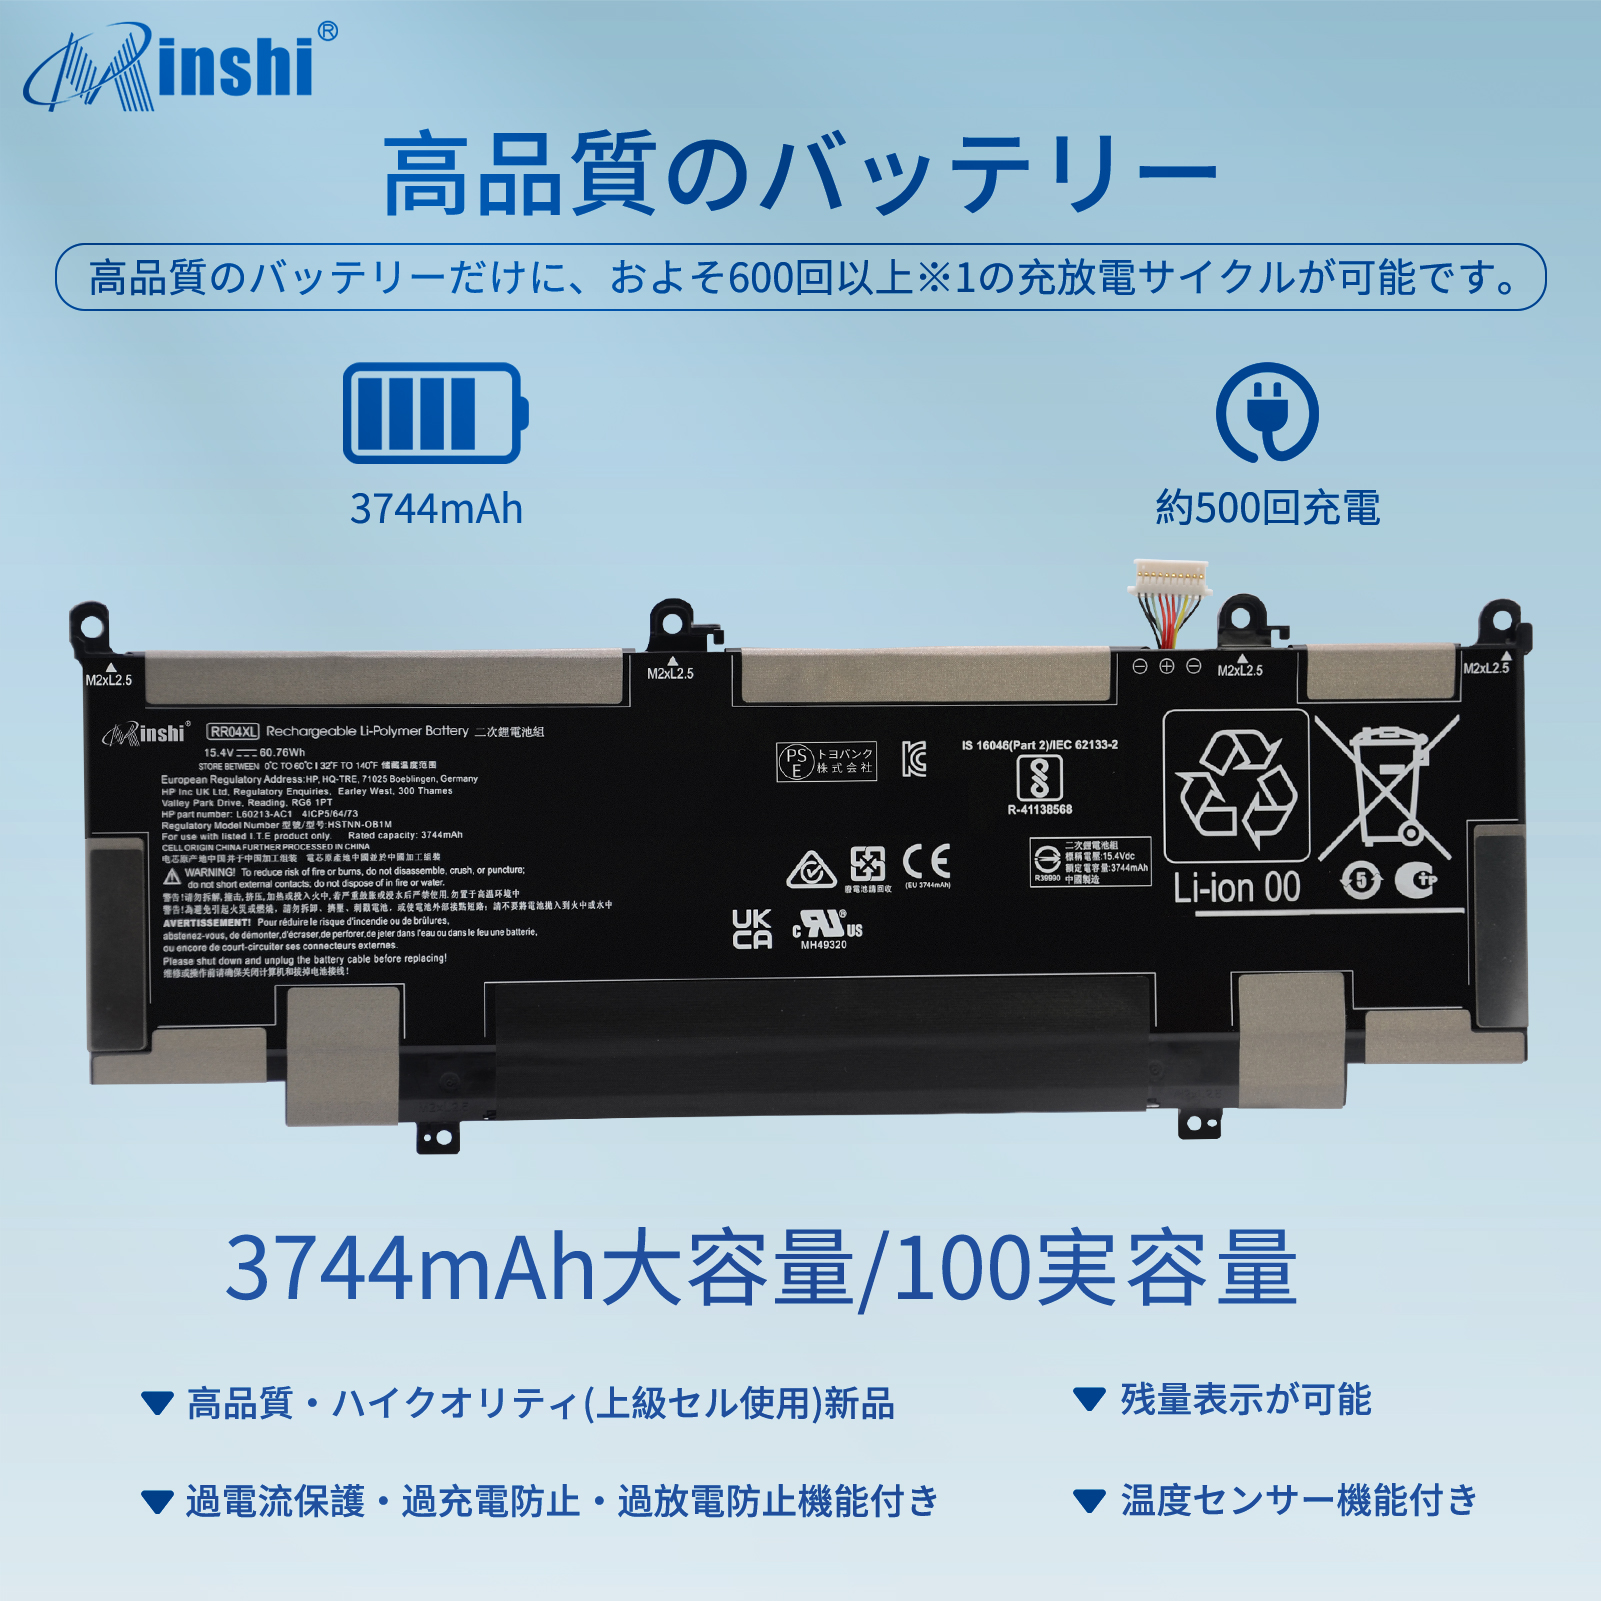 minshi HP RR04XL L60213-2C1 AC1対応 3744mAh Spectre x360 13-aw0000 RR04XL互換バッテリー